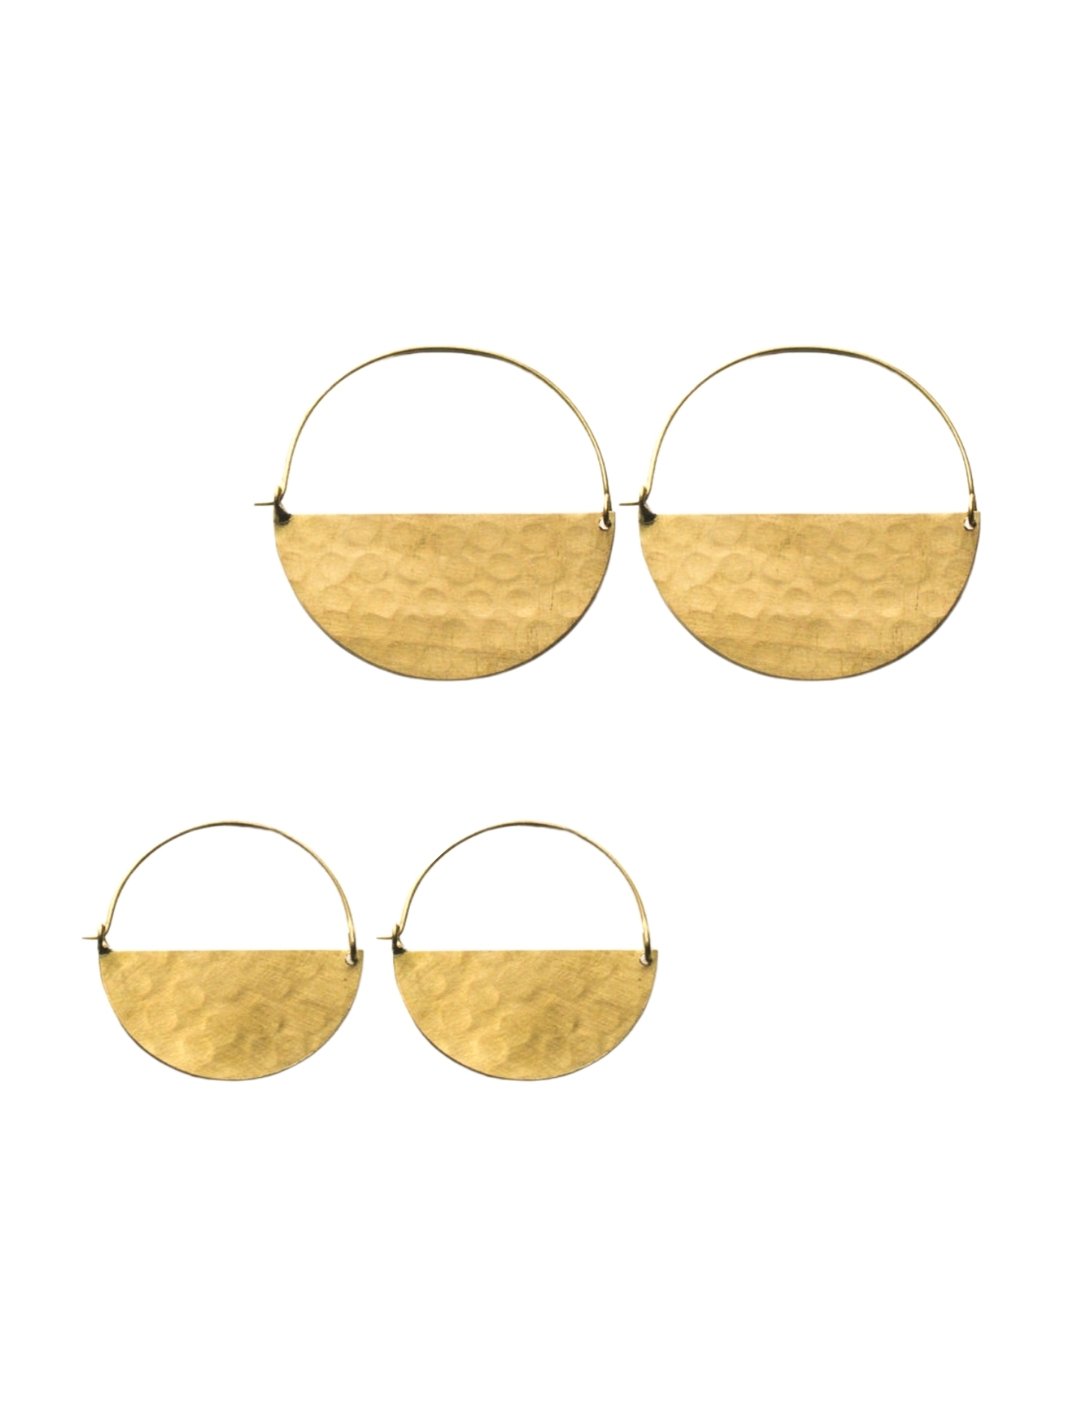 brass half circle earrings in gold